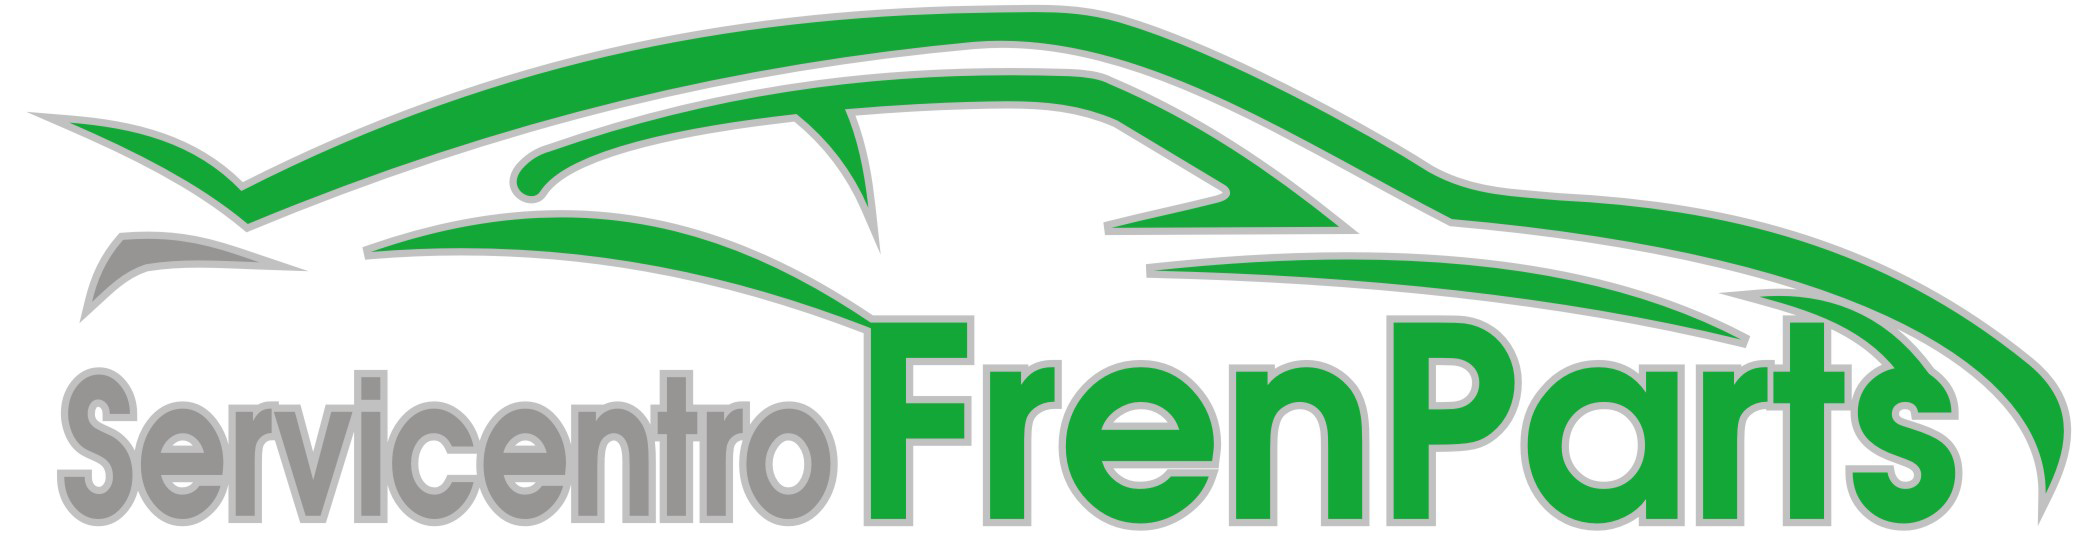 Logo Freenparts S.A.S.